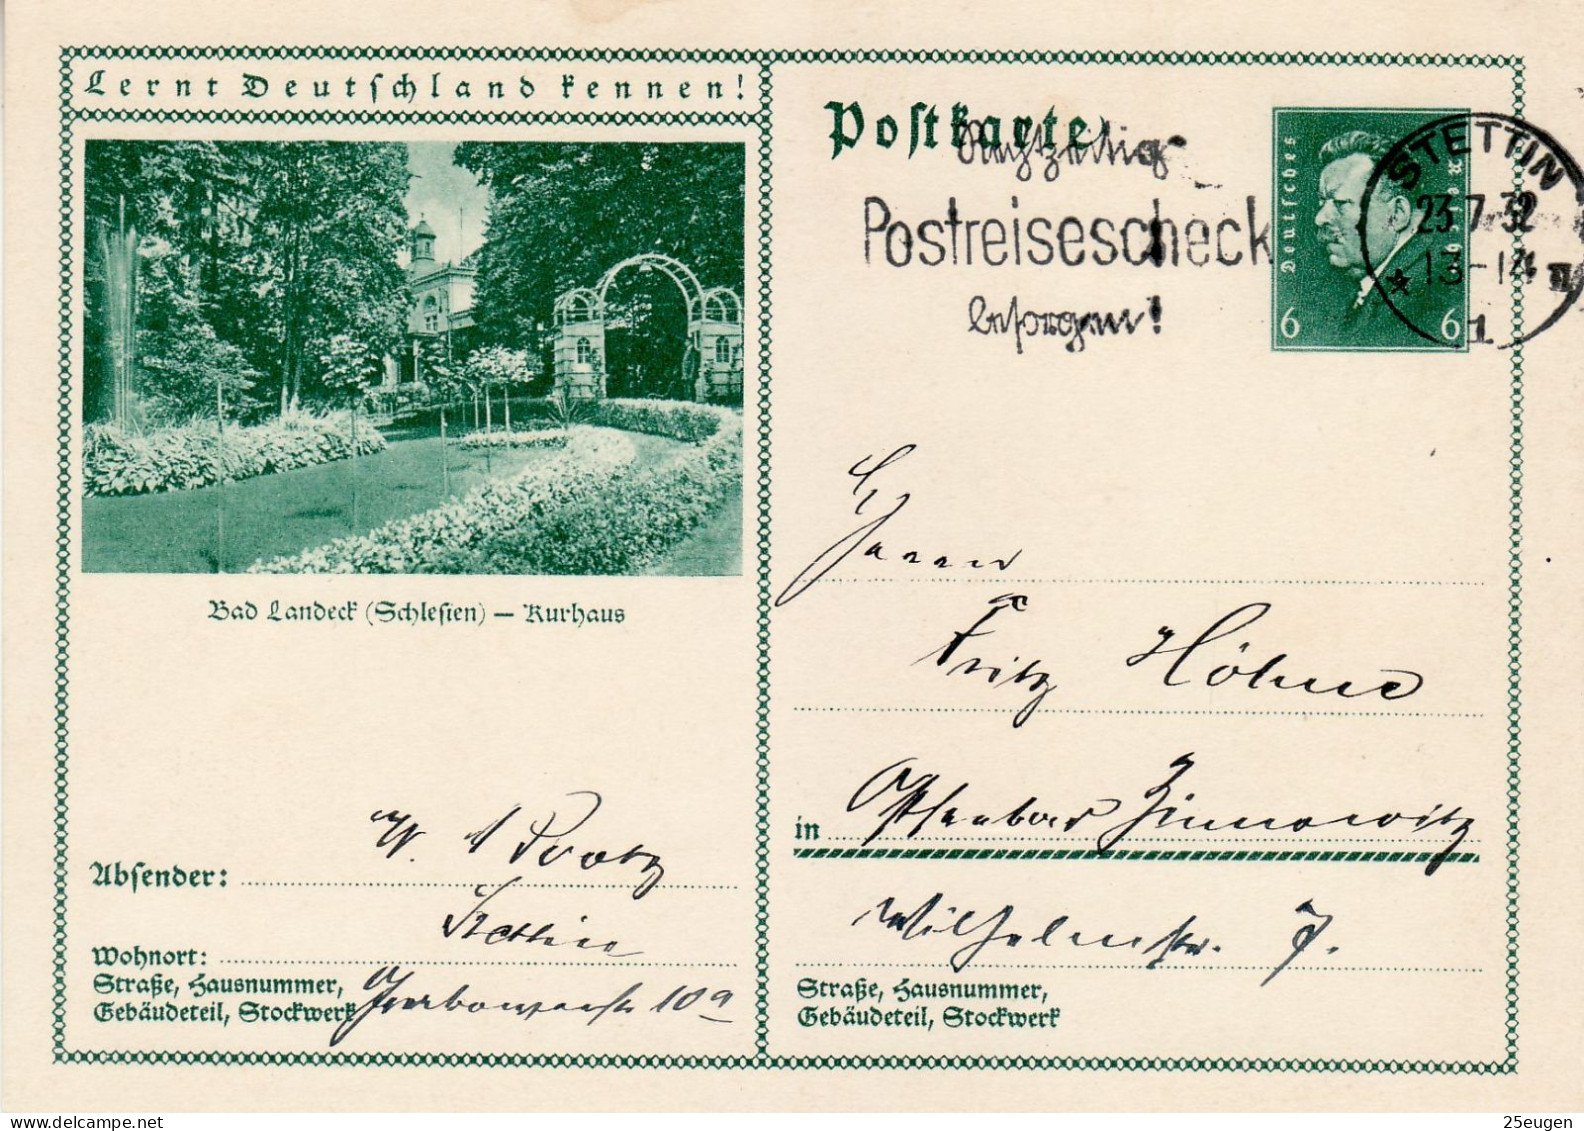 GERMANY WEIMAR REPUBLIC 1932 POSTCARD  MiNr P 202 SENT FROM STETTIN /SZCZECIN/ - Cartes Postales